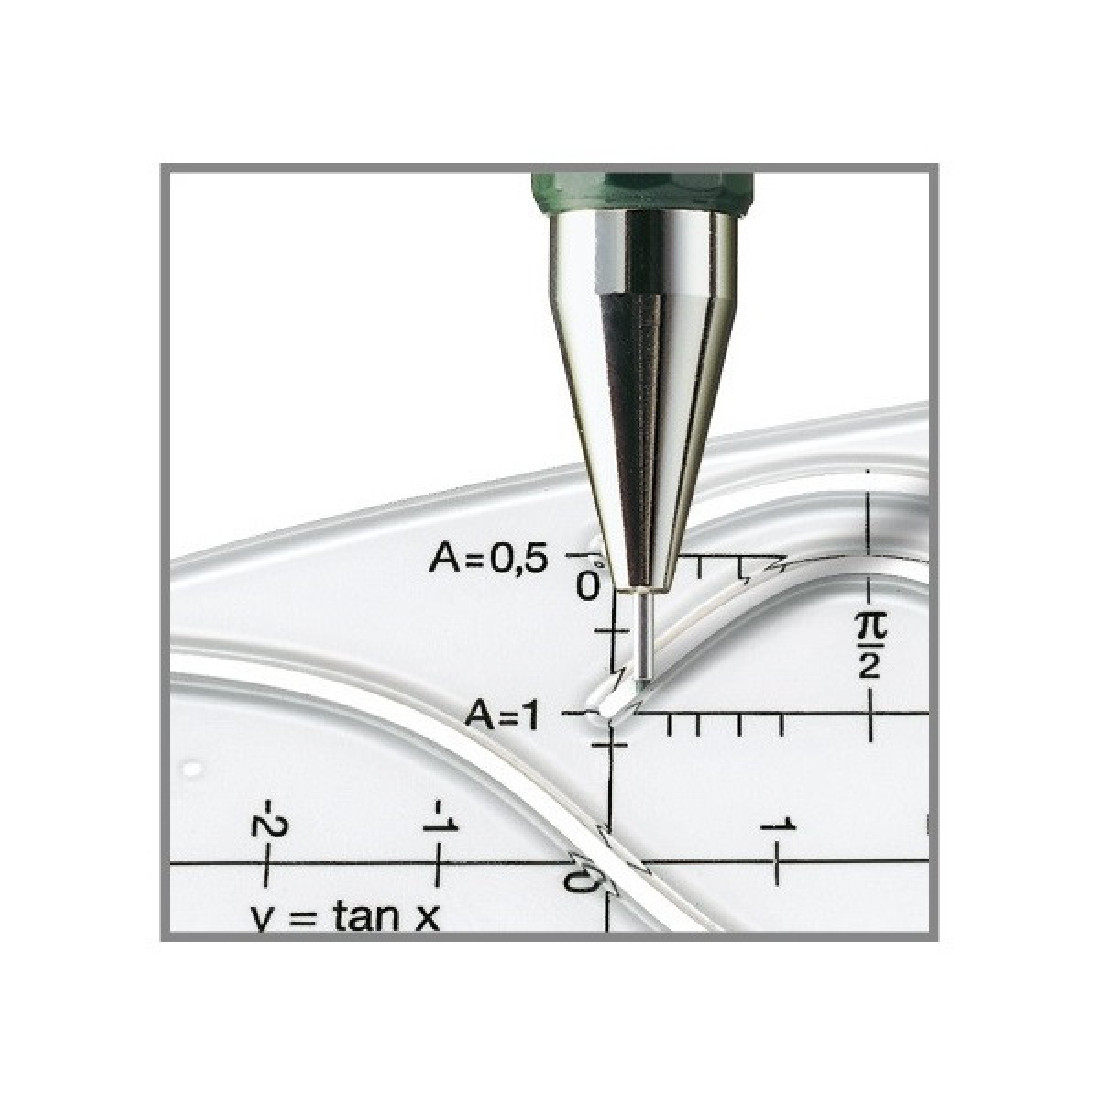 Mechanical pencil TK-Fine 9713 0.35mm (136200) Faber Castell